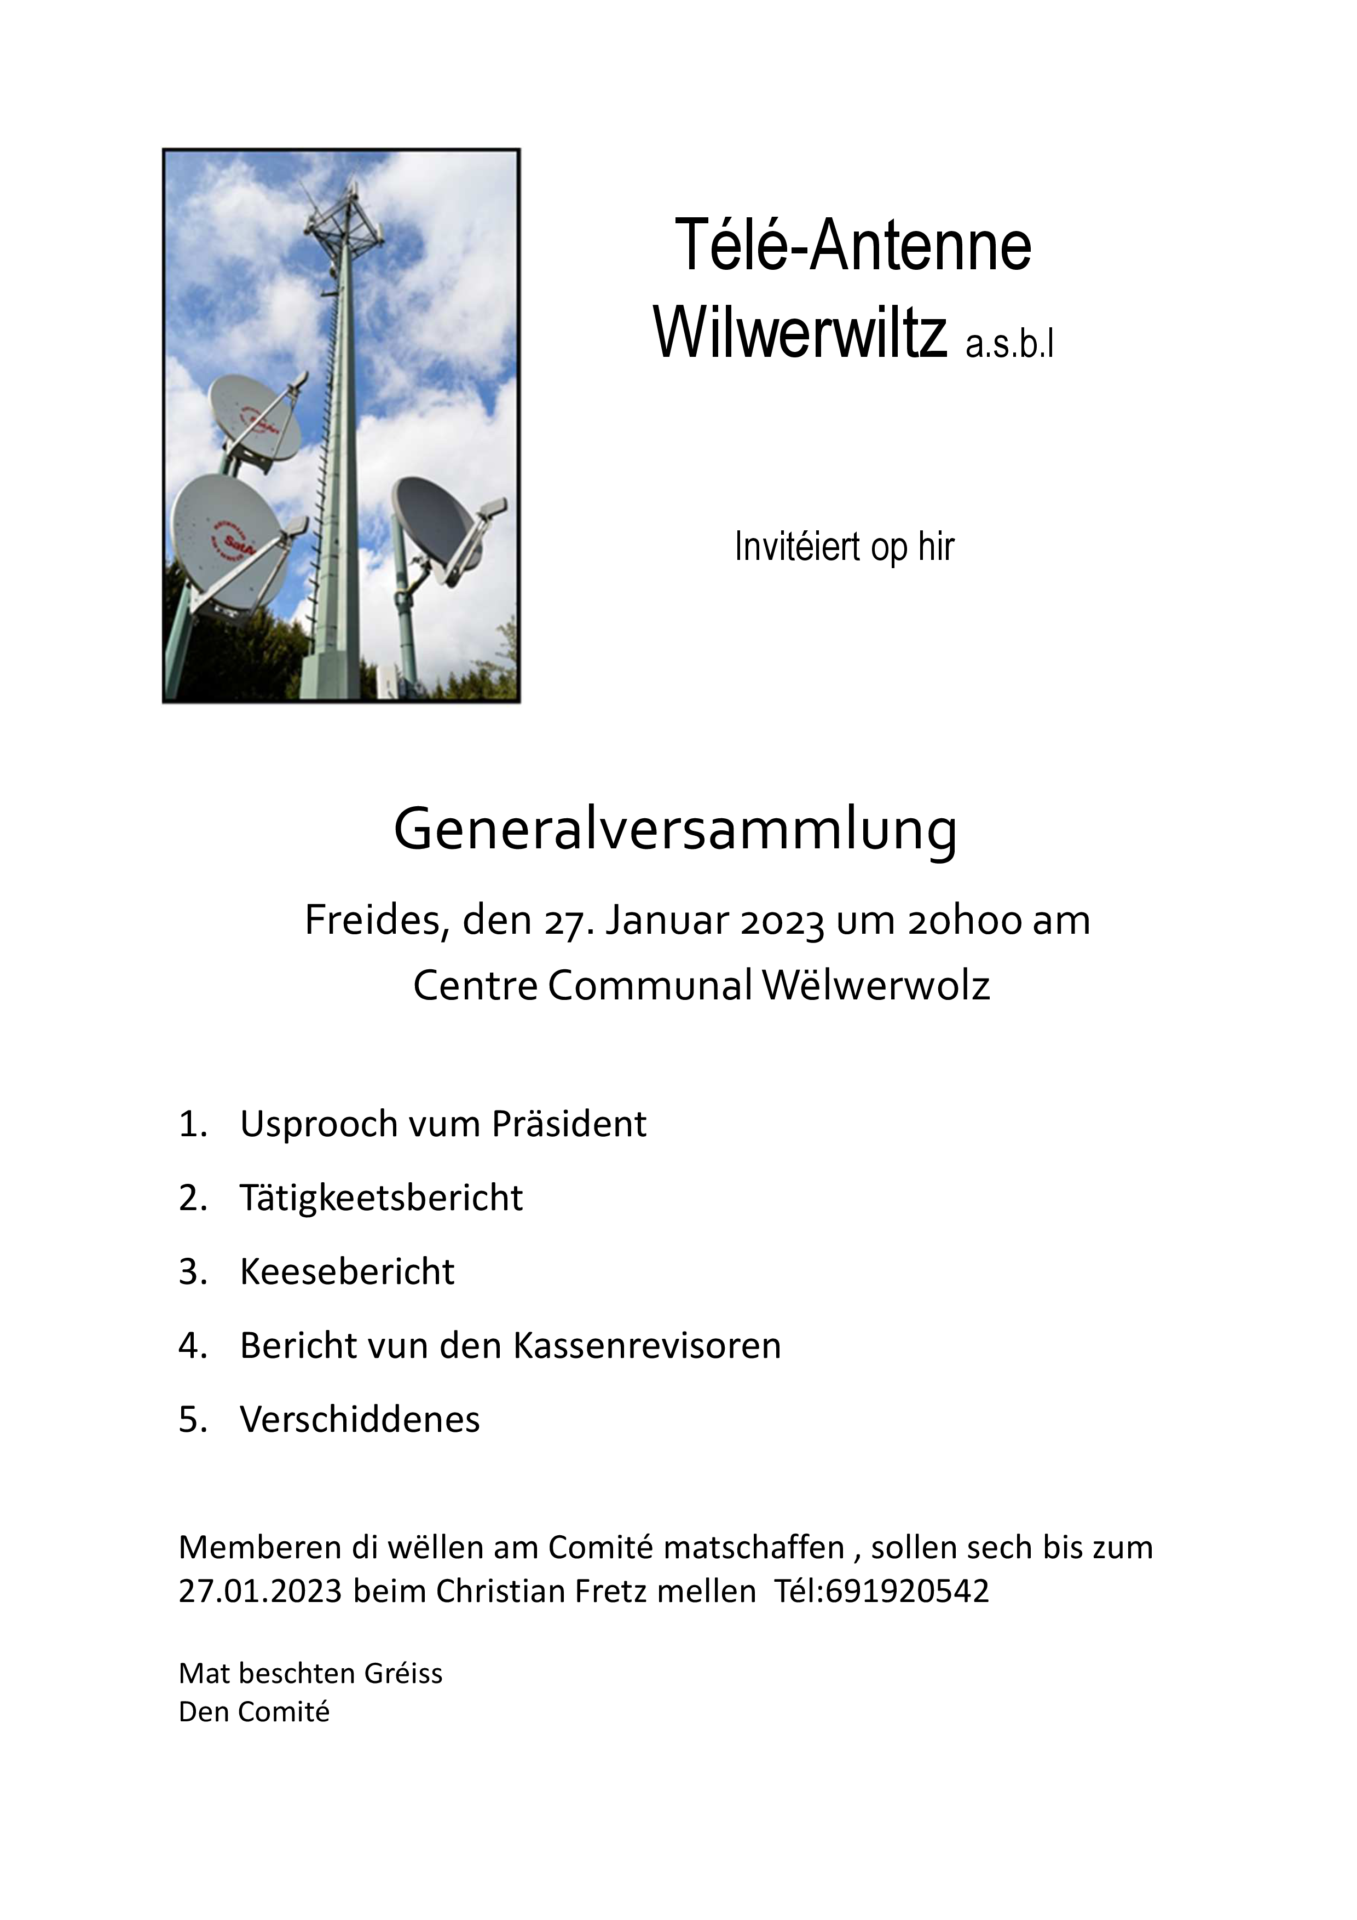 Télé-Antenne Wilwerwiltz - Generalversammlung 27. Januar 2023